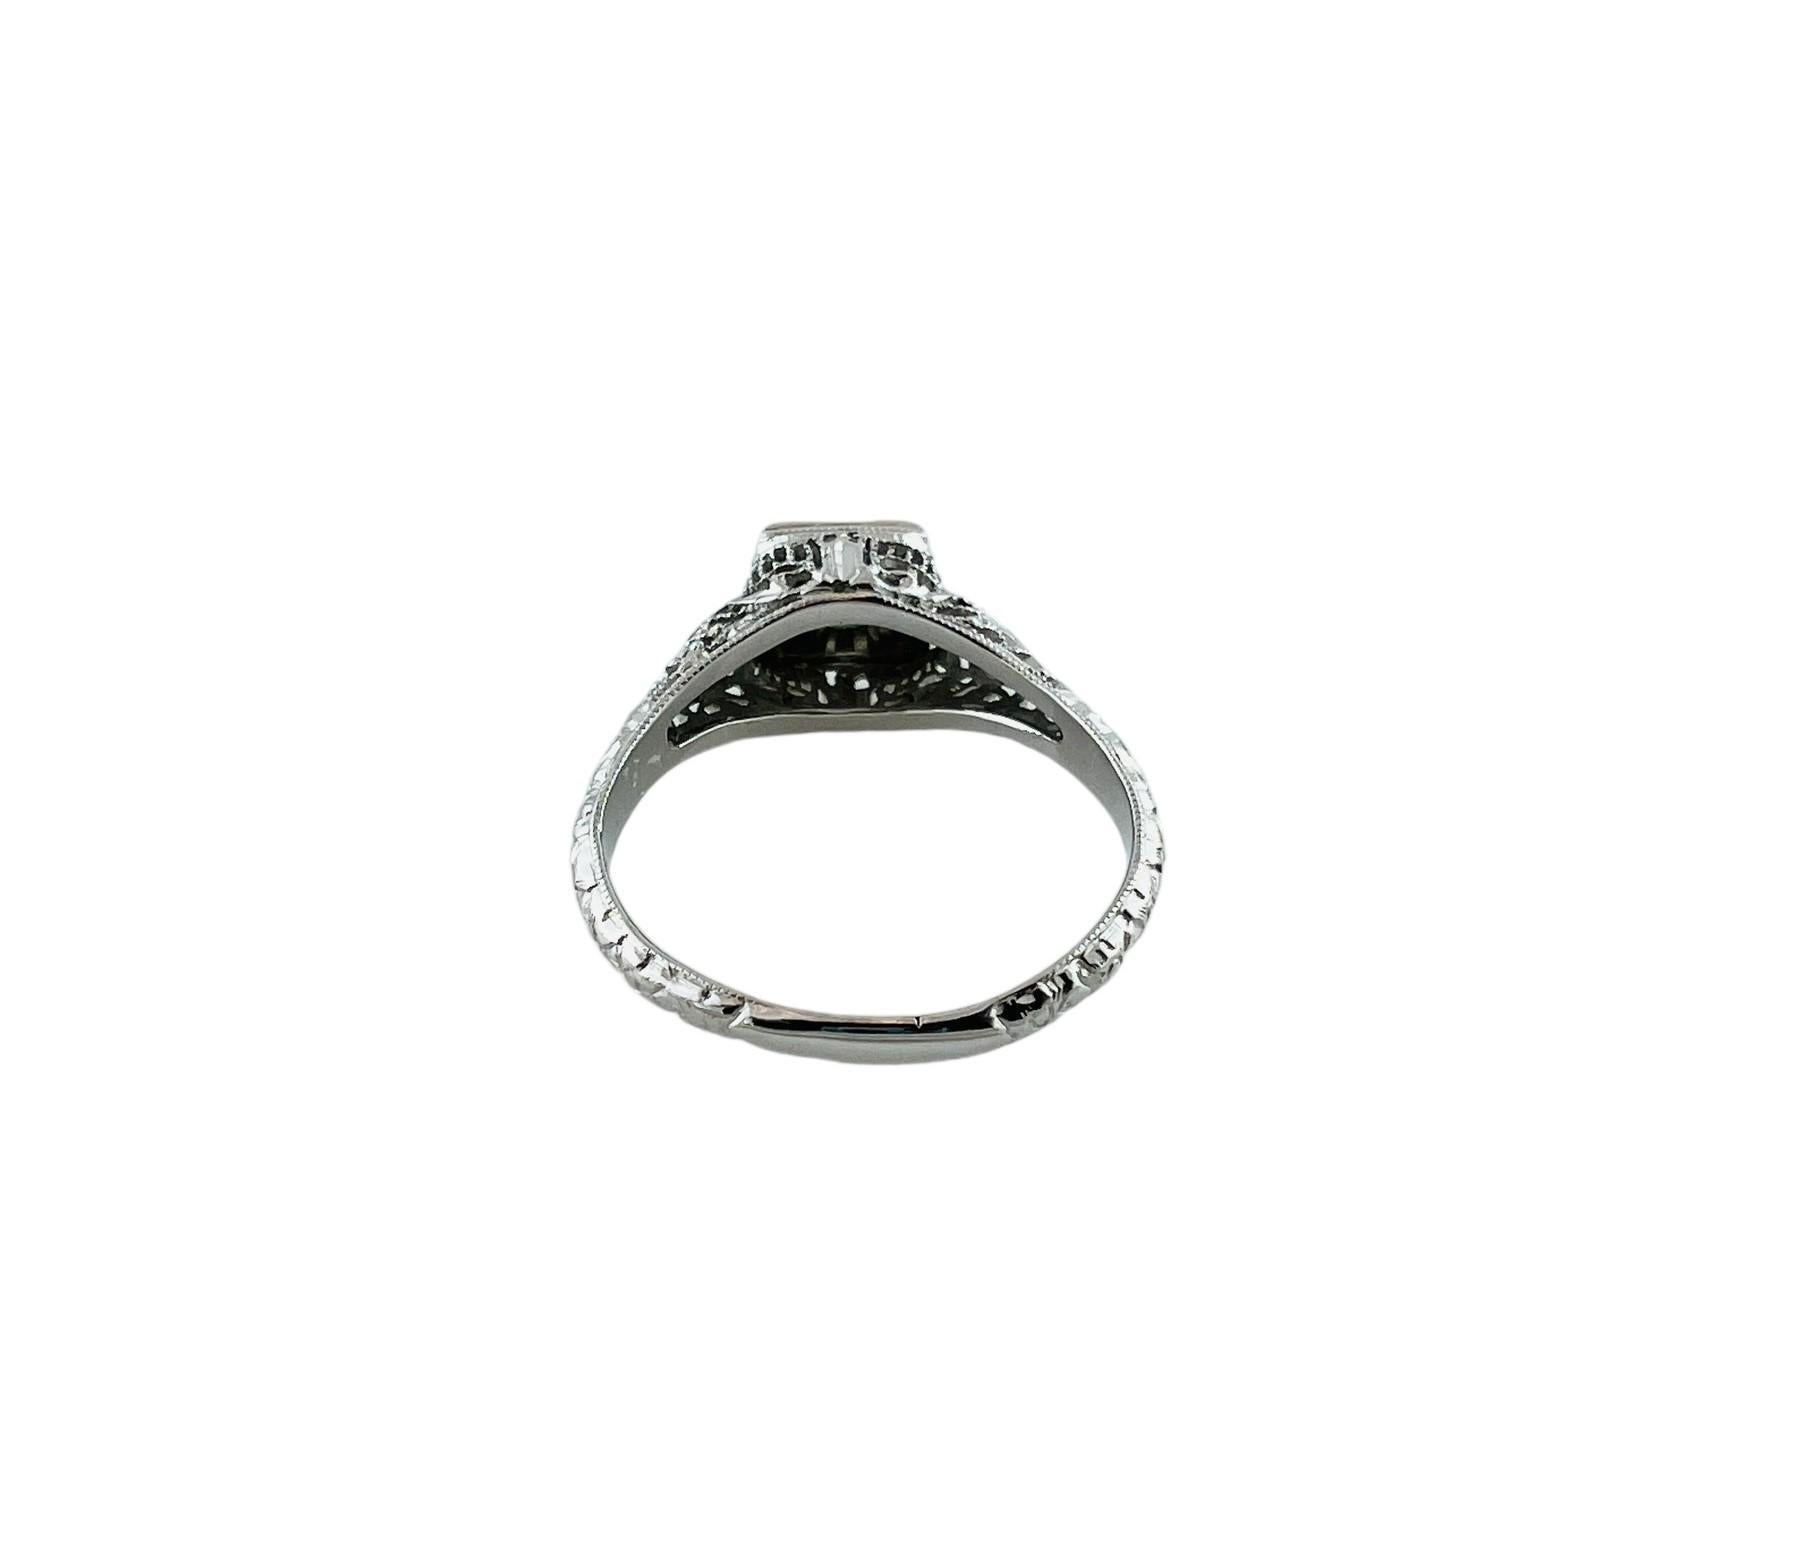 18K White Gold Filigree Diamond Ring Size 7 #16547 For Sale 2